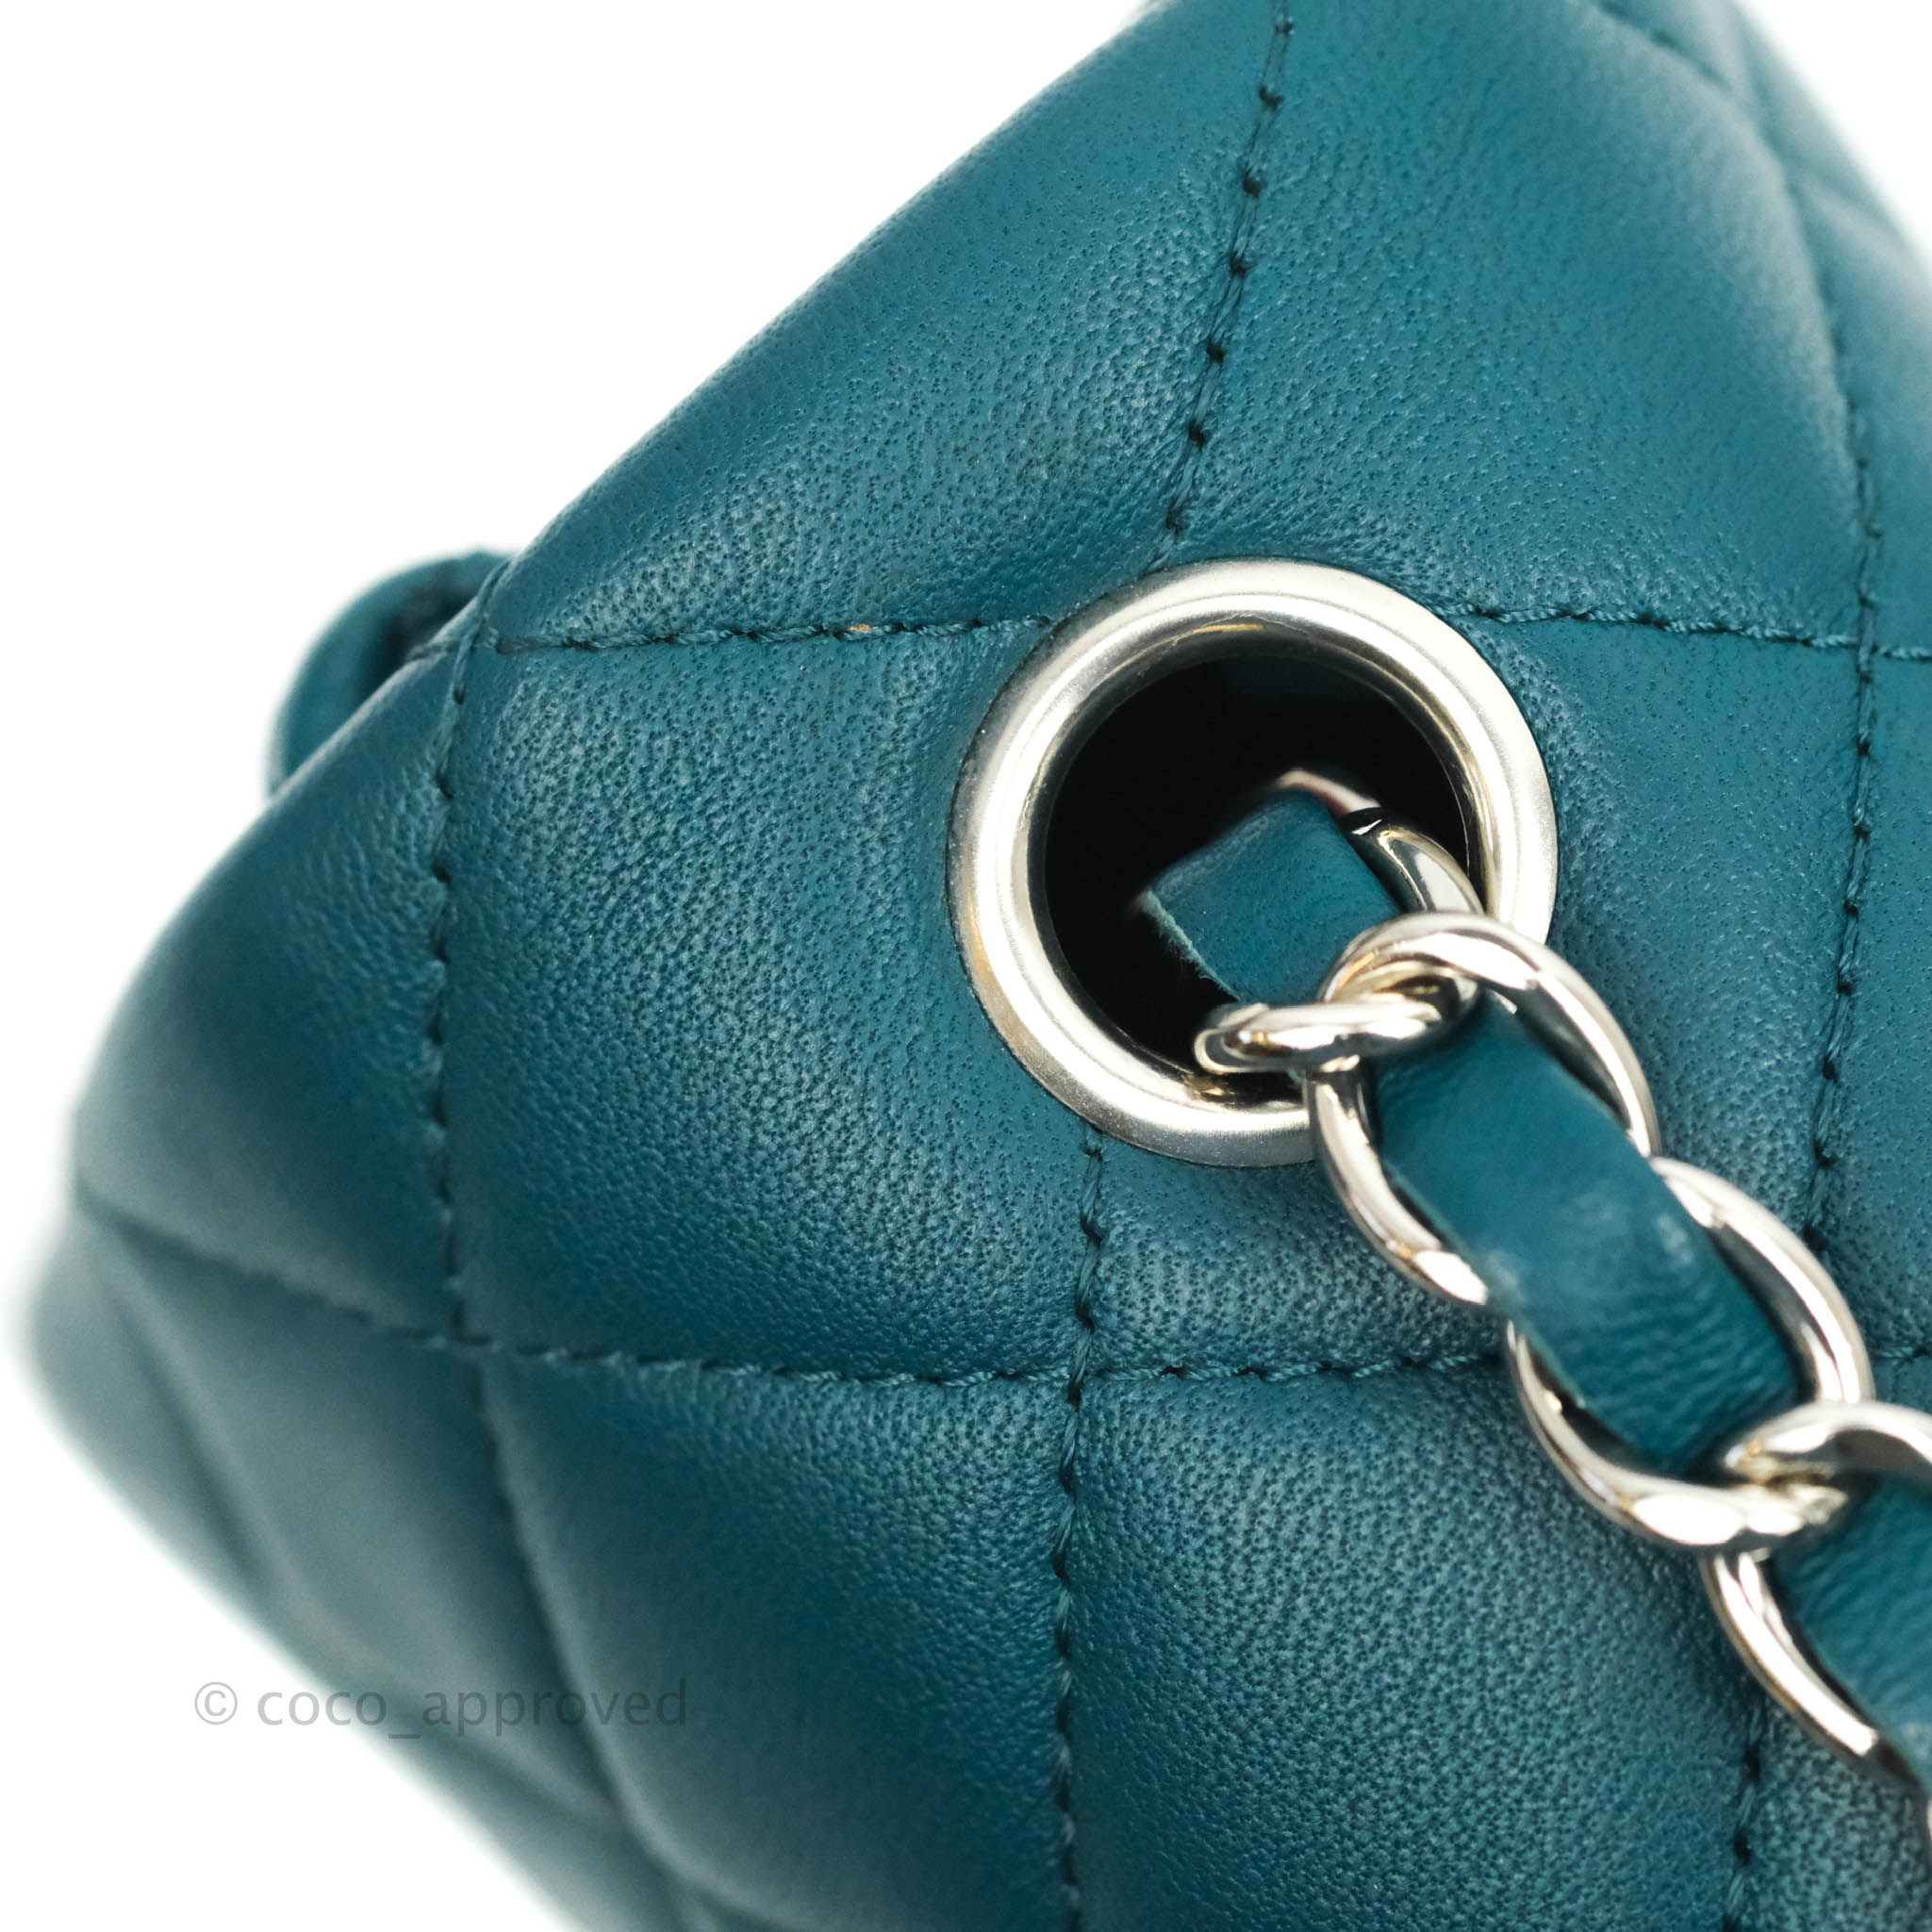 Chanel Mini Rectangular Flap Bag Turquoise Lambskin Light Gold Hardware